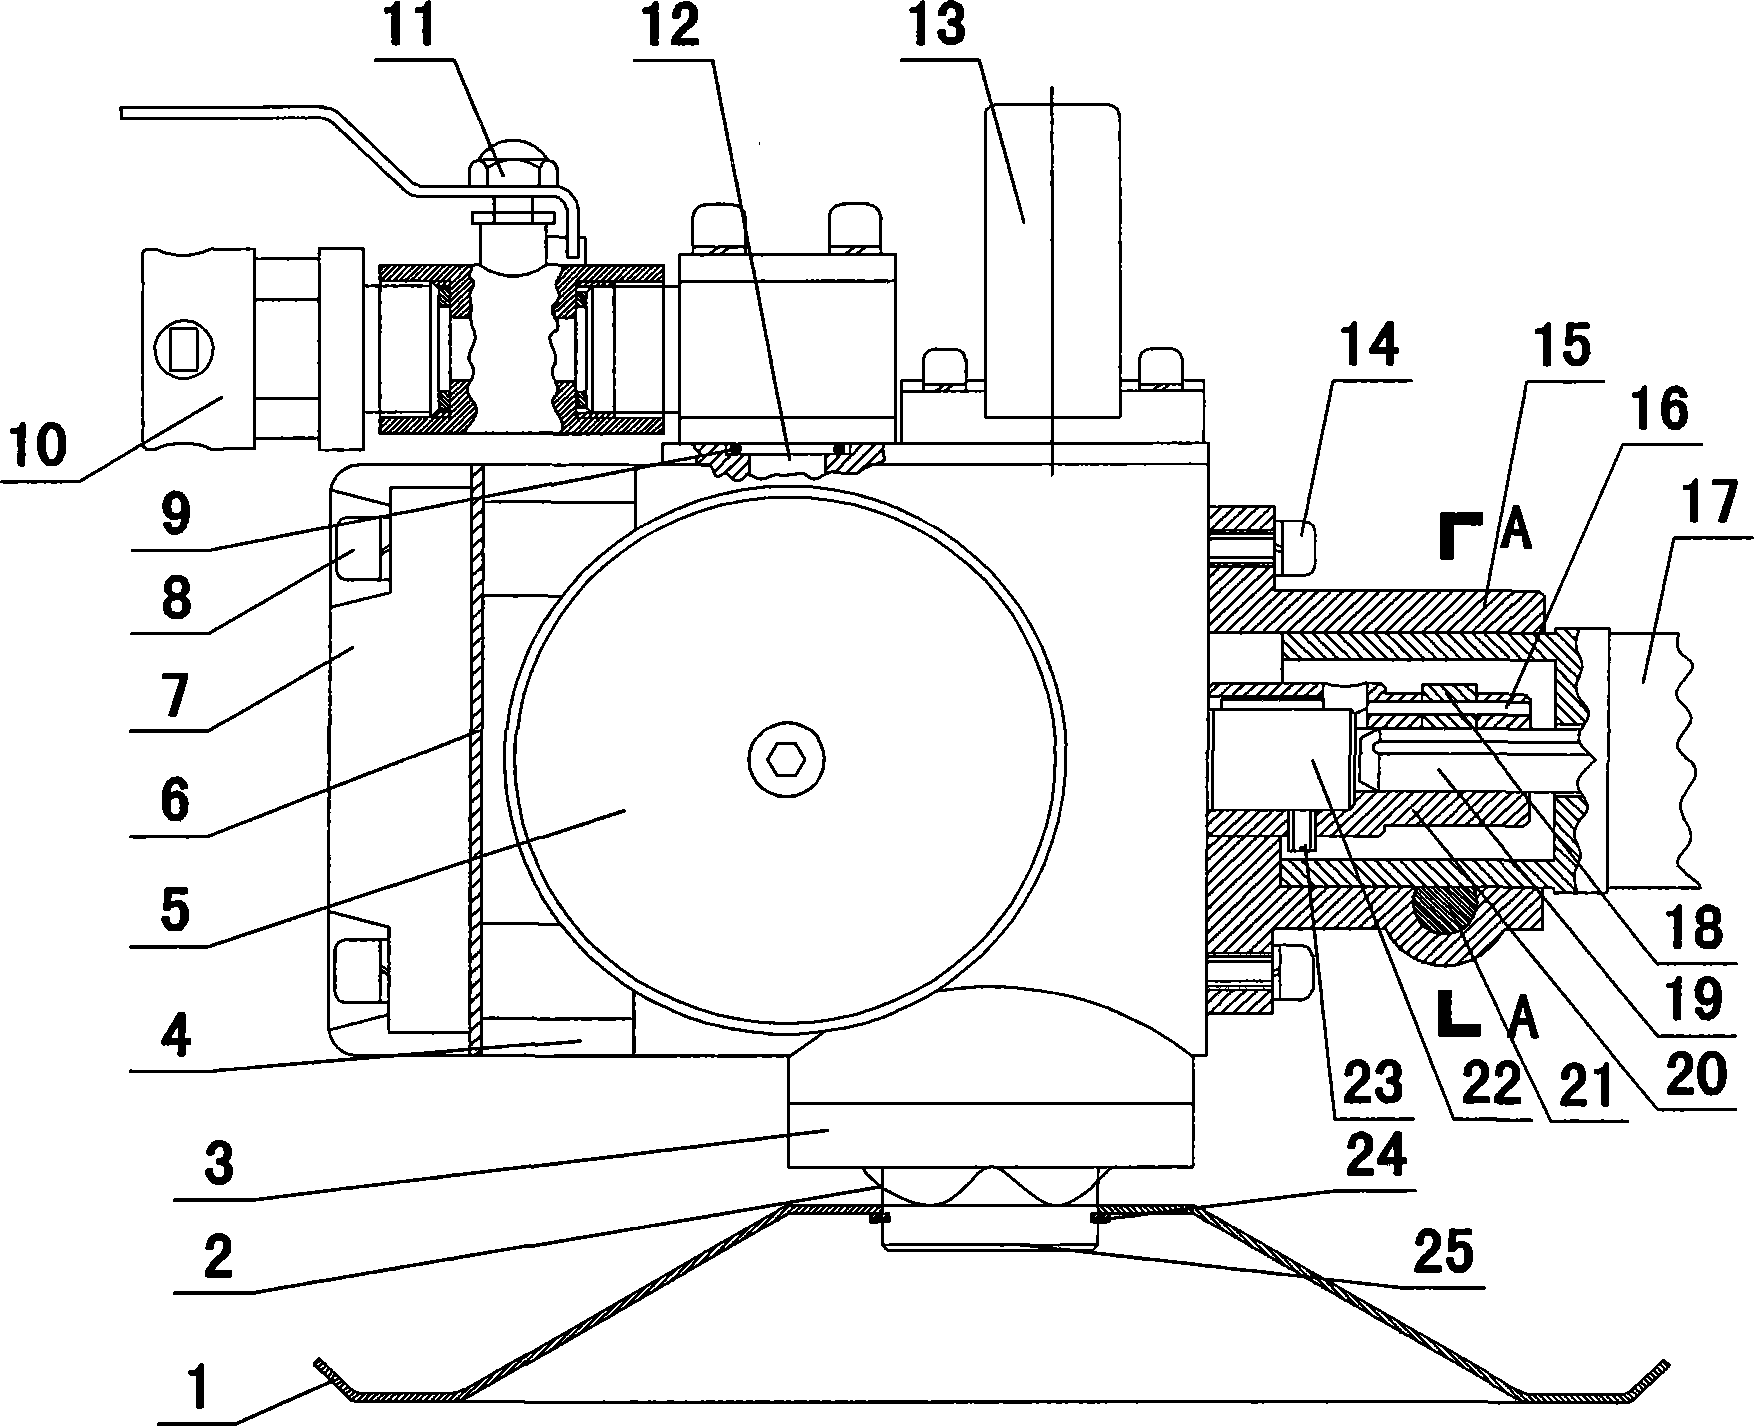 Pneumatic concrete vibrator